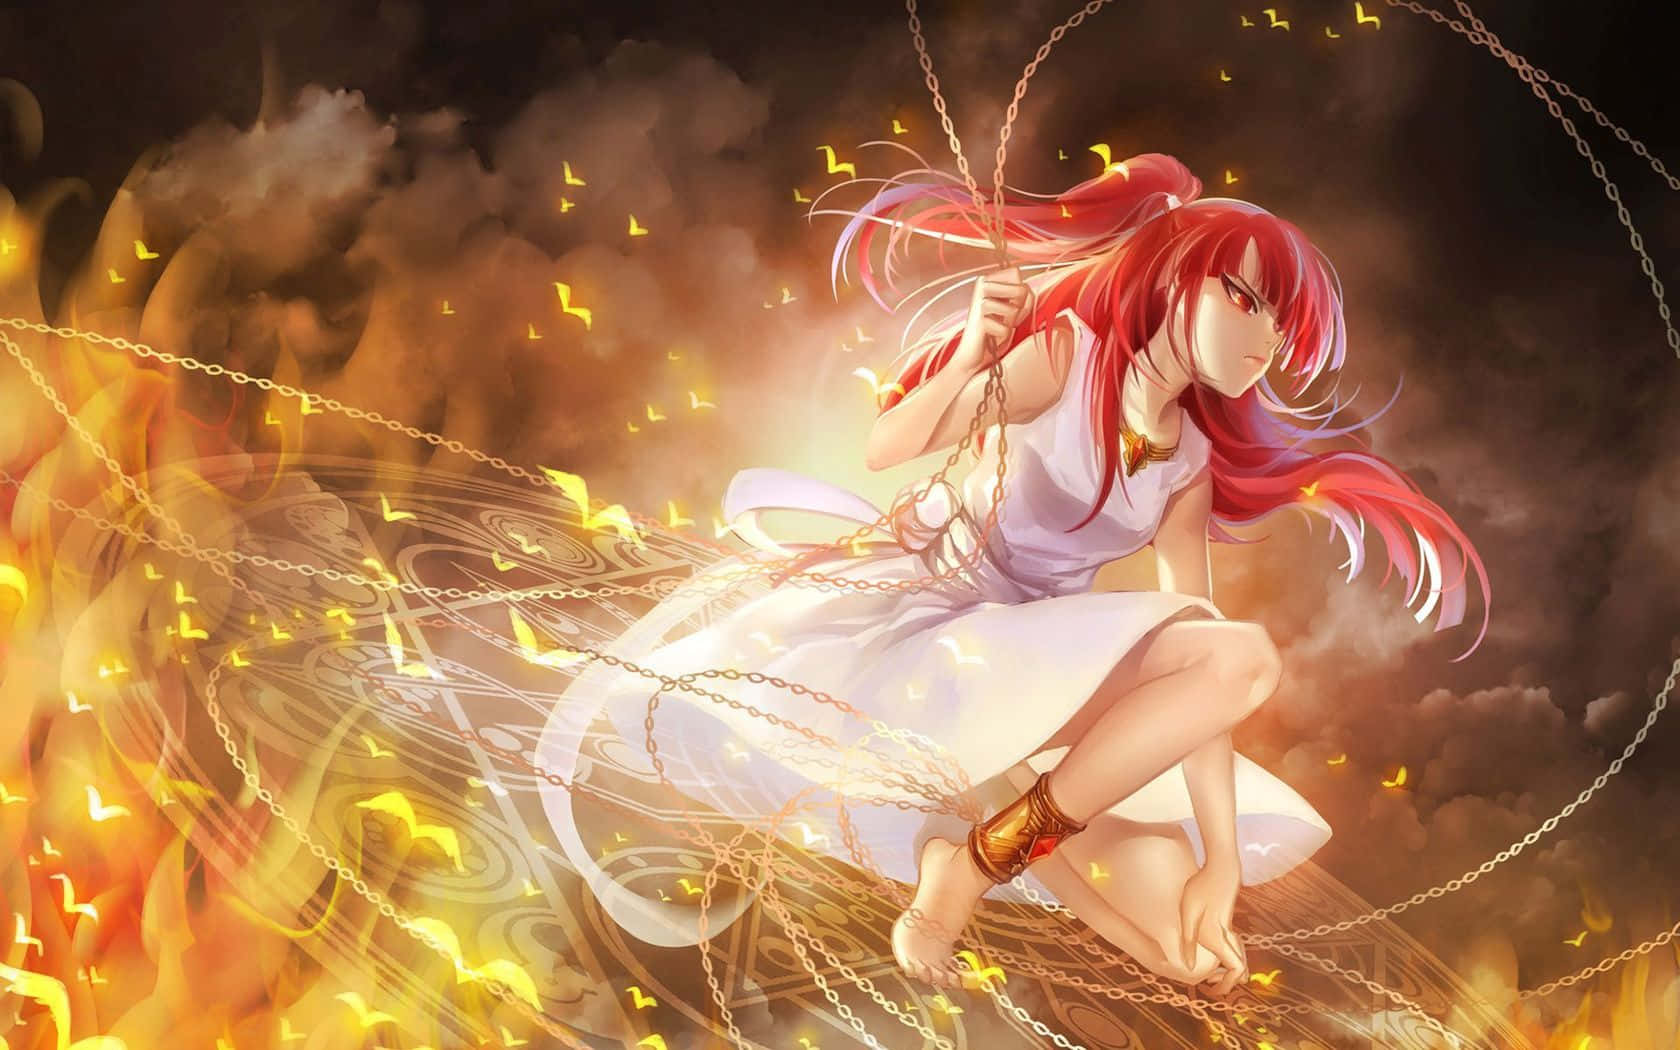 The Fire Dancer Morgiana - Magi Anime Wallpaper